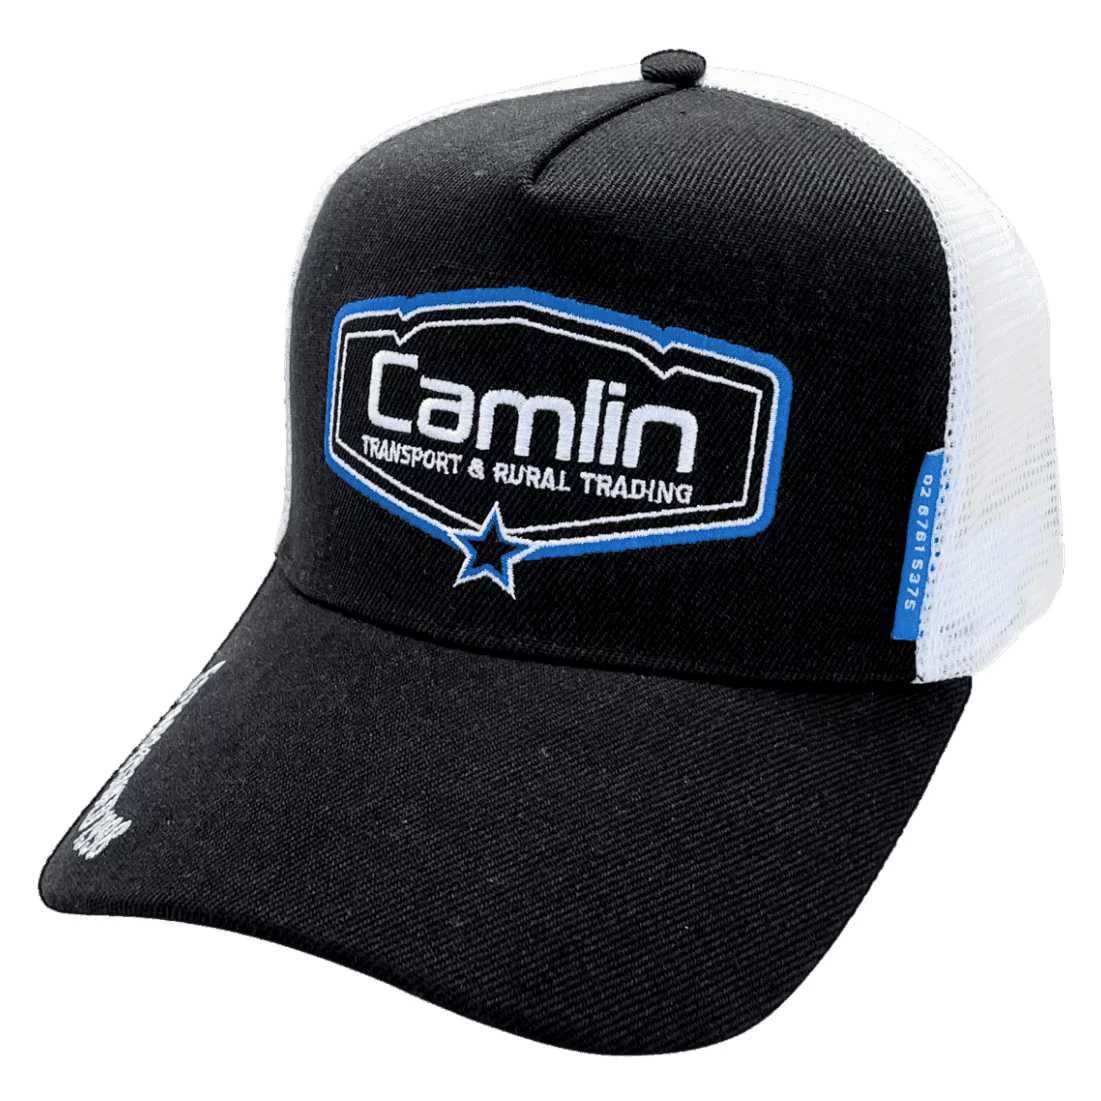 Camlin Transport and Rural Trading Tamworth NSW HP Midrange Aussie Trucker Hat with Australia Head Fit Crown Size black, white, blue